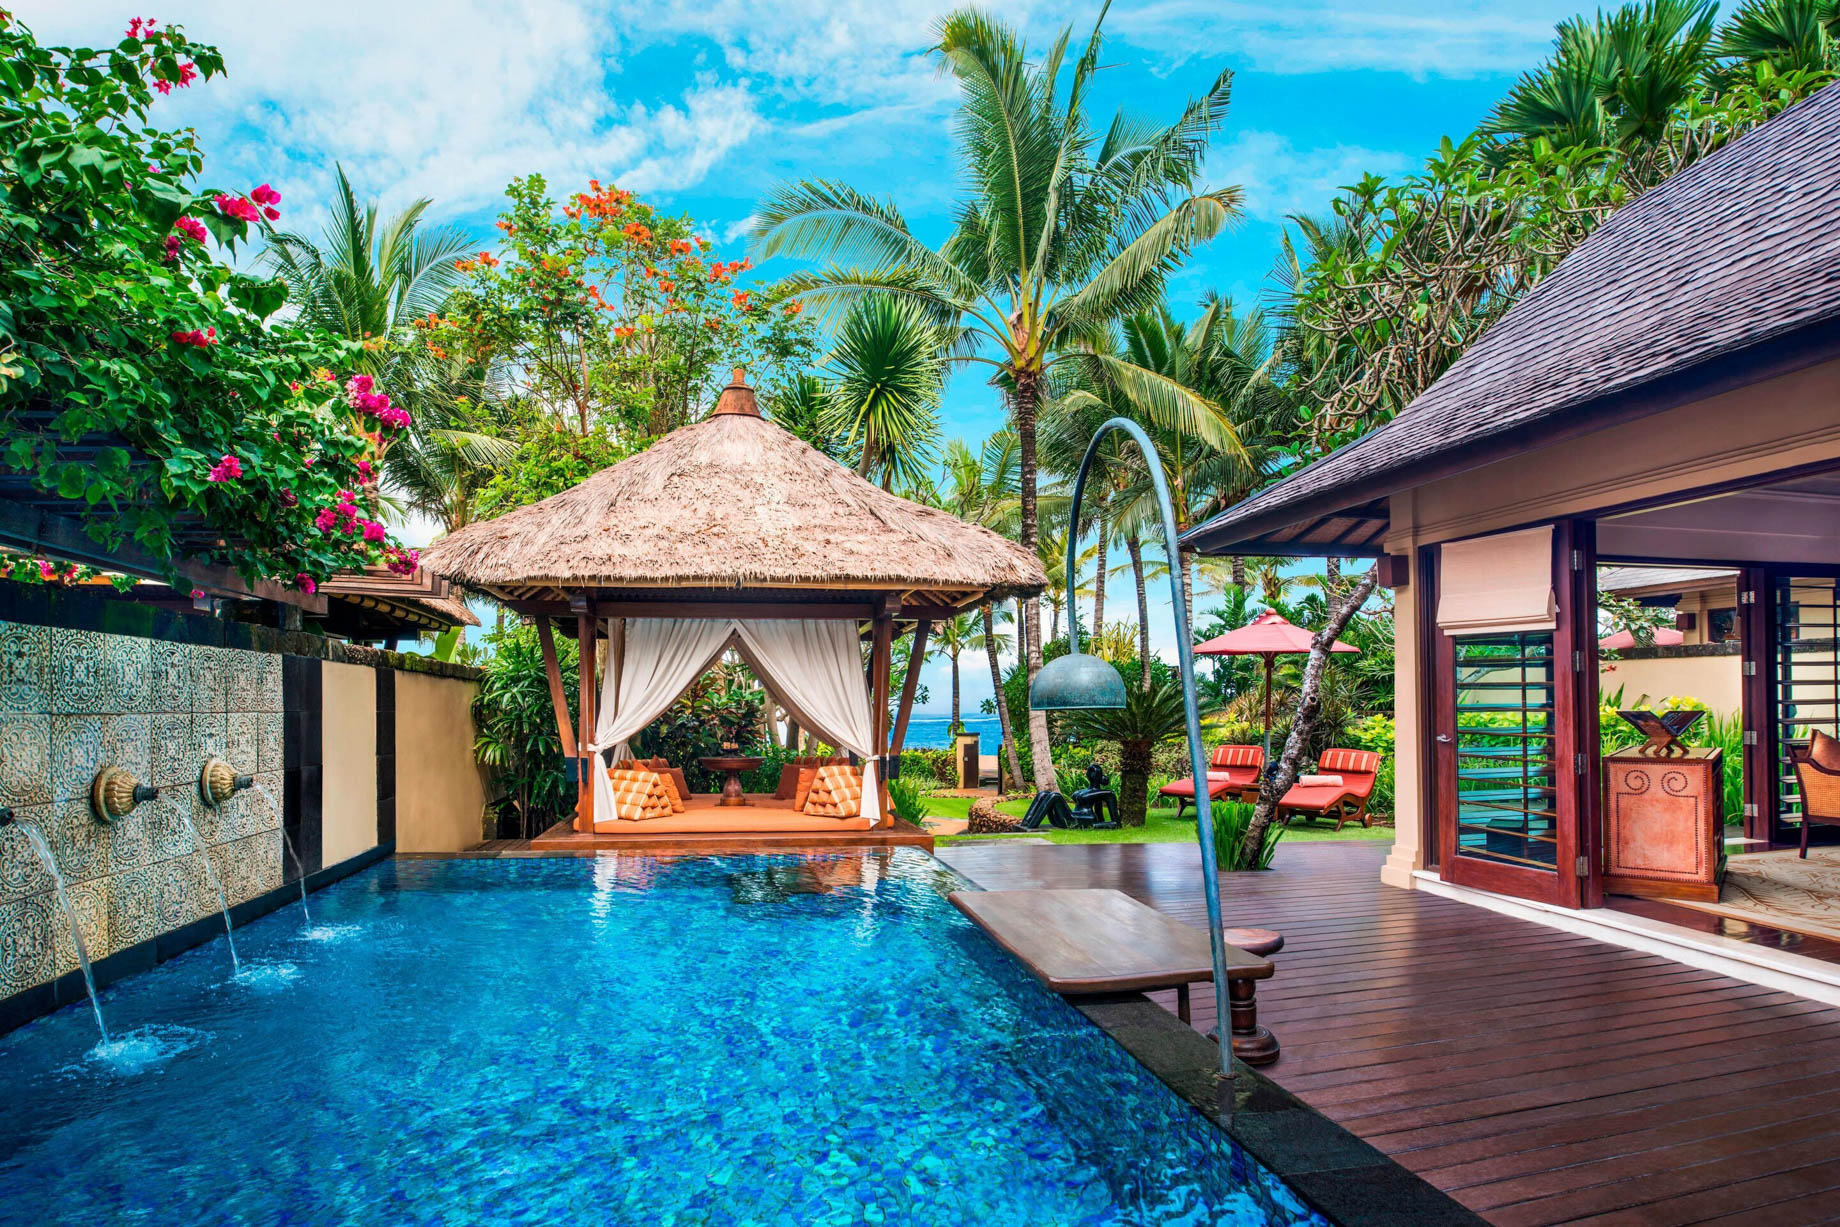 The St. Regis Bali Resort - Bali, Indonesia - Strand Villa Private Pool and Gazebo